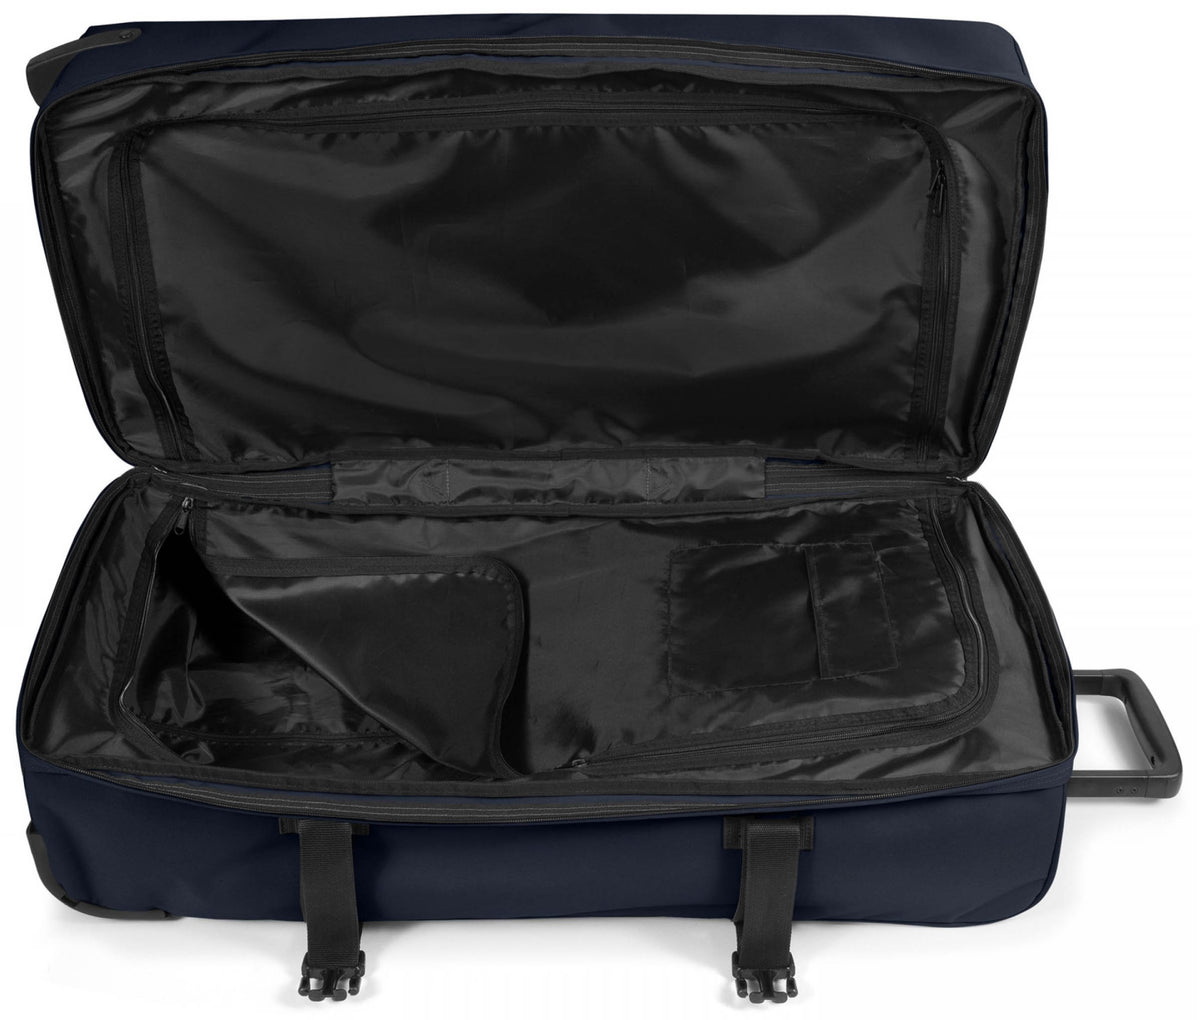 Eastpak Tranverz L Suitcase - Ultra Marine